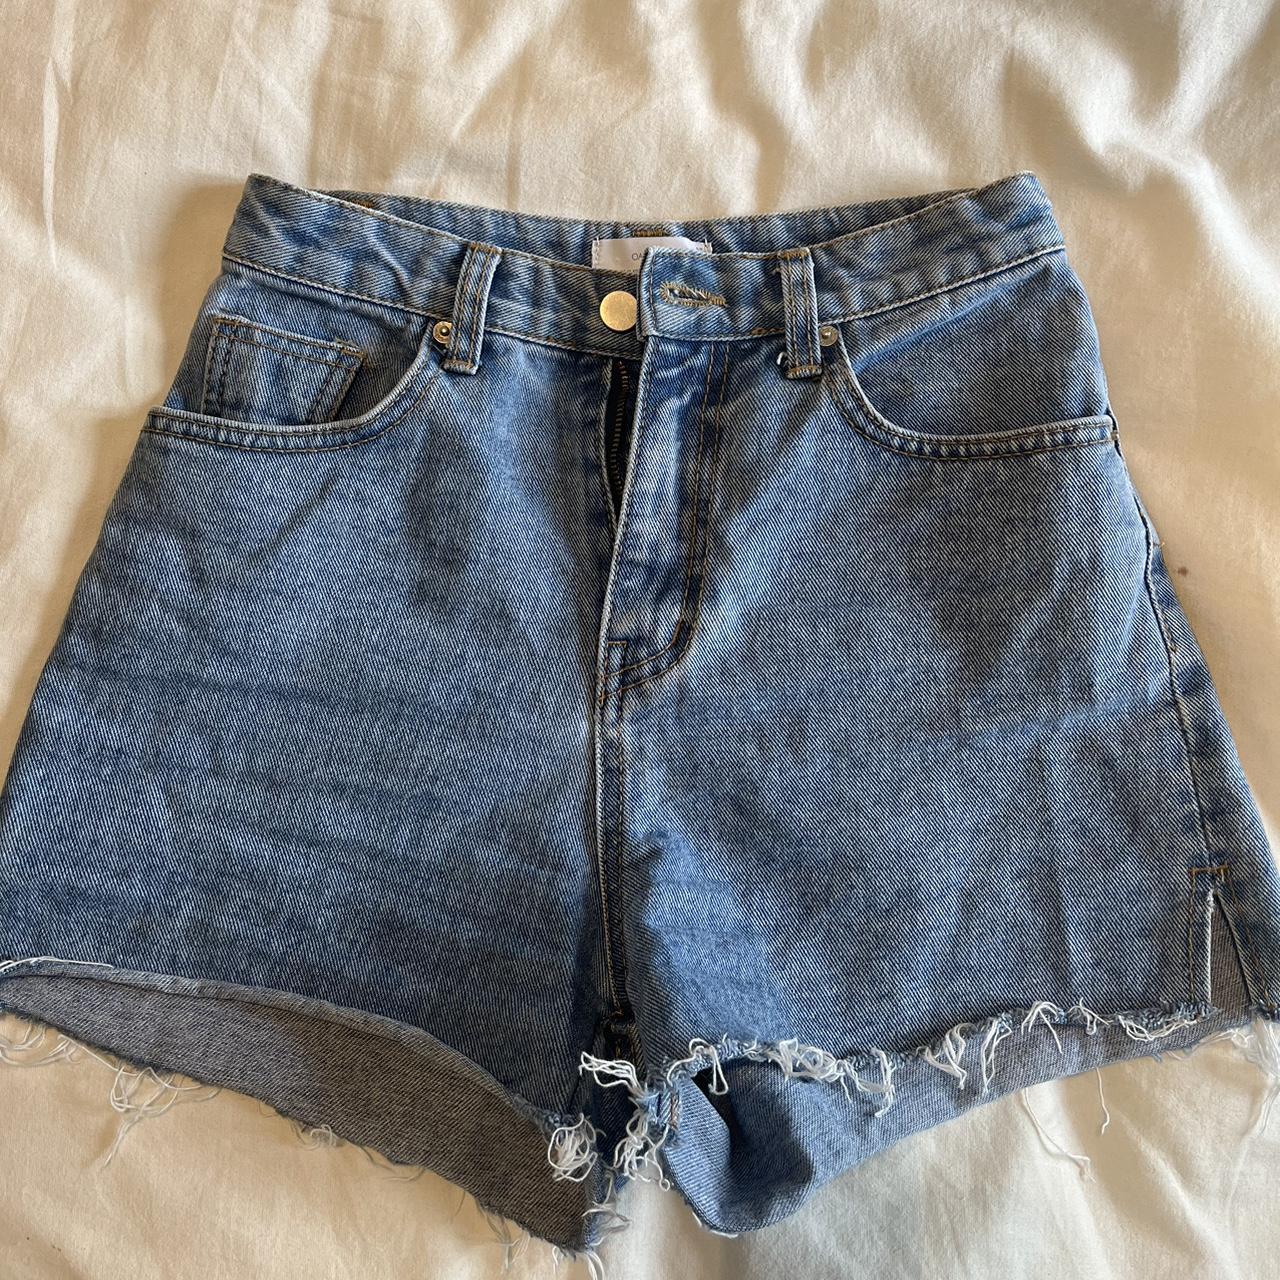 Oak + Fort jean shorts ️ Cute little details Fits a... - Depop